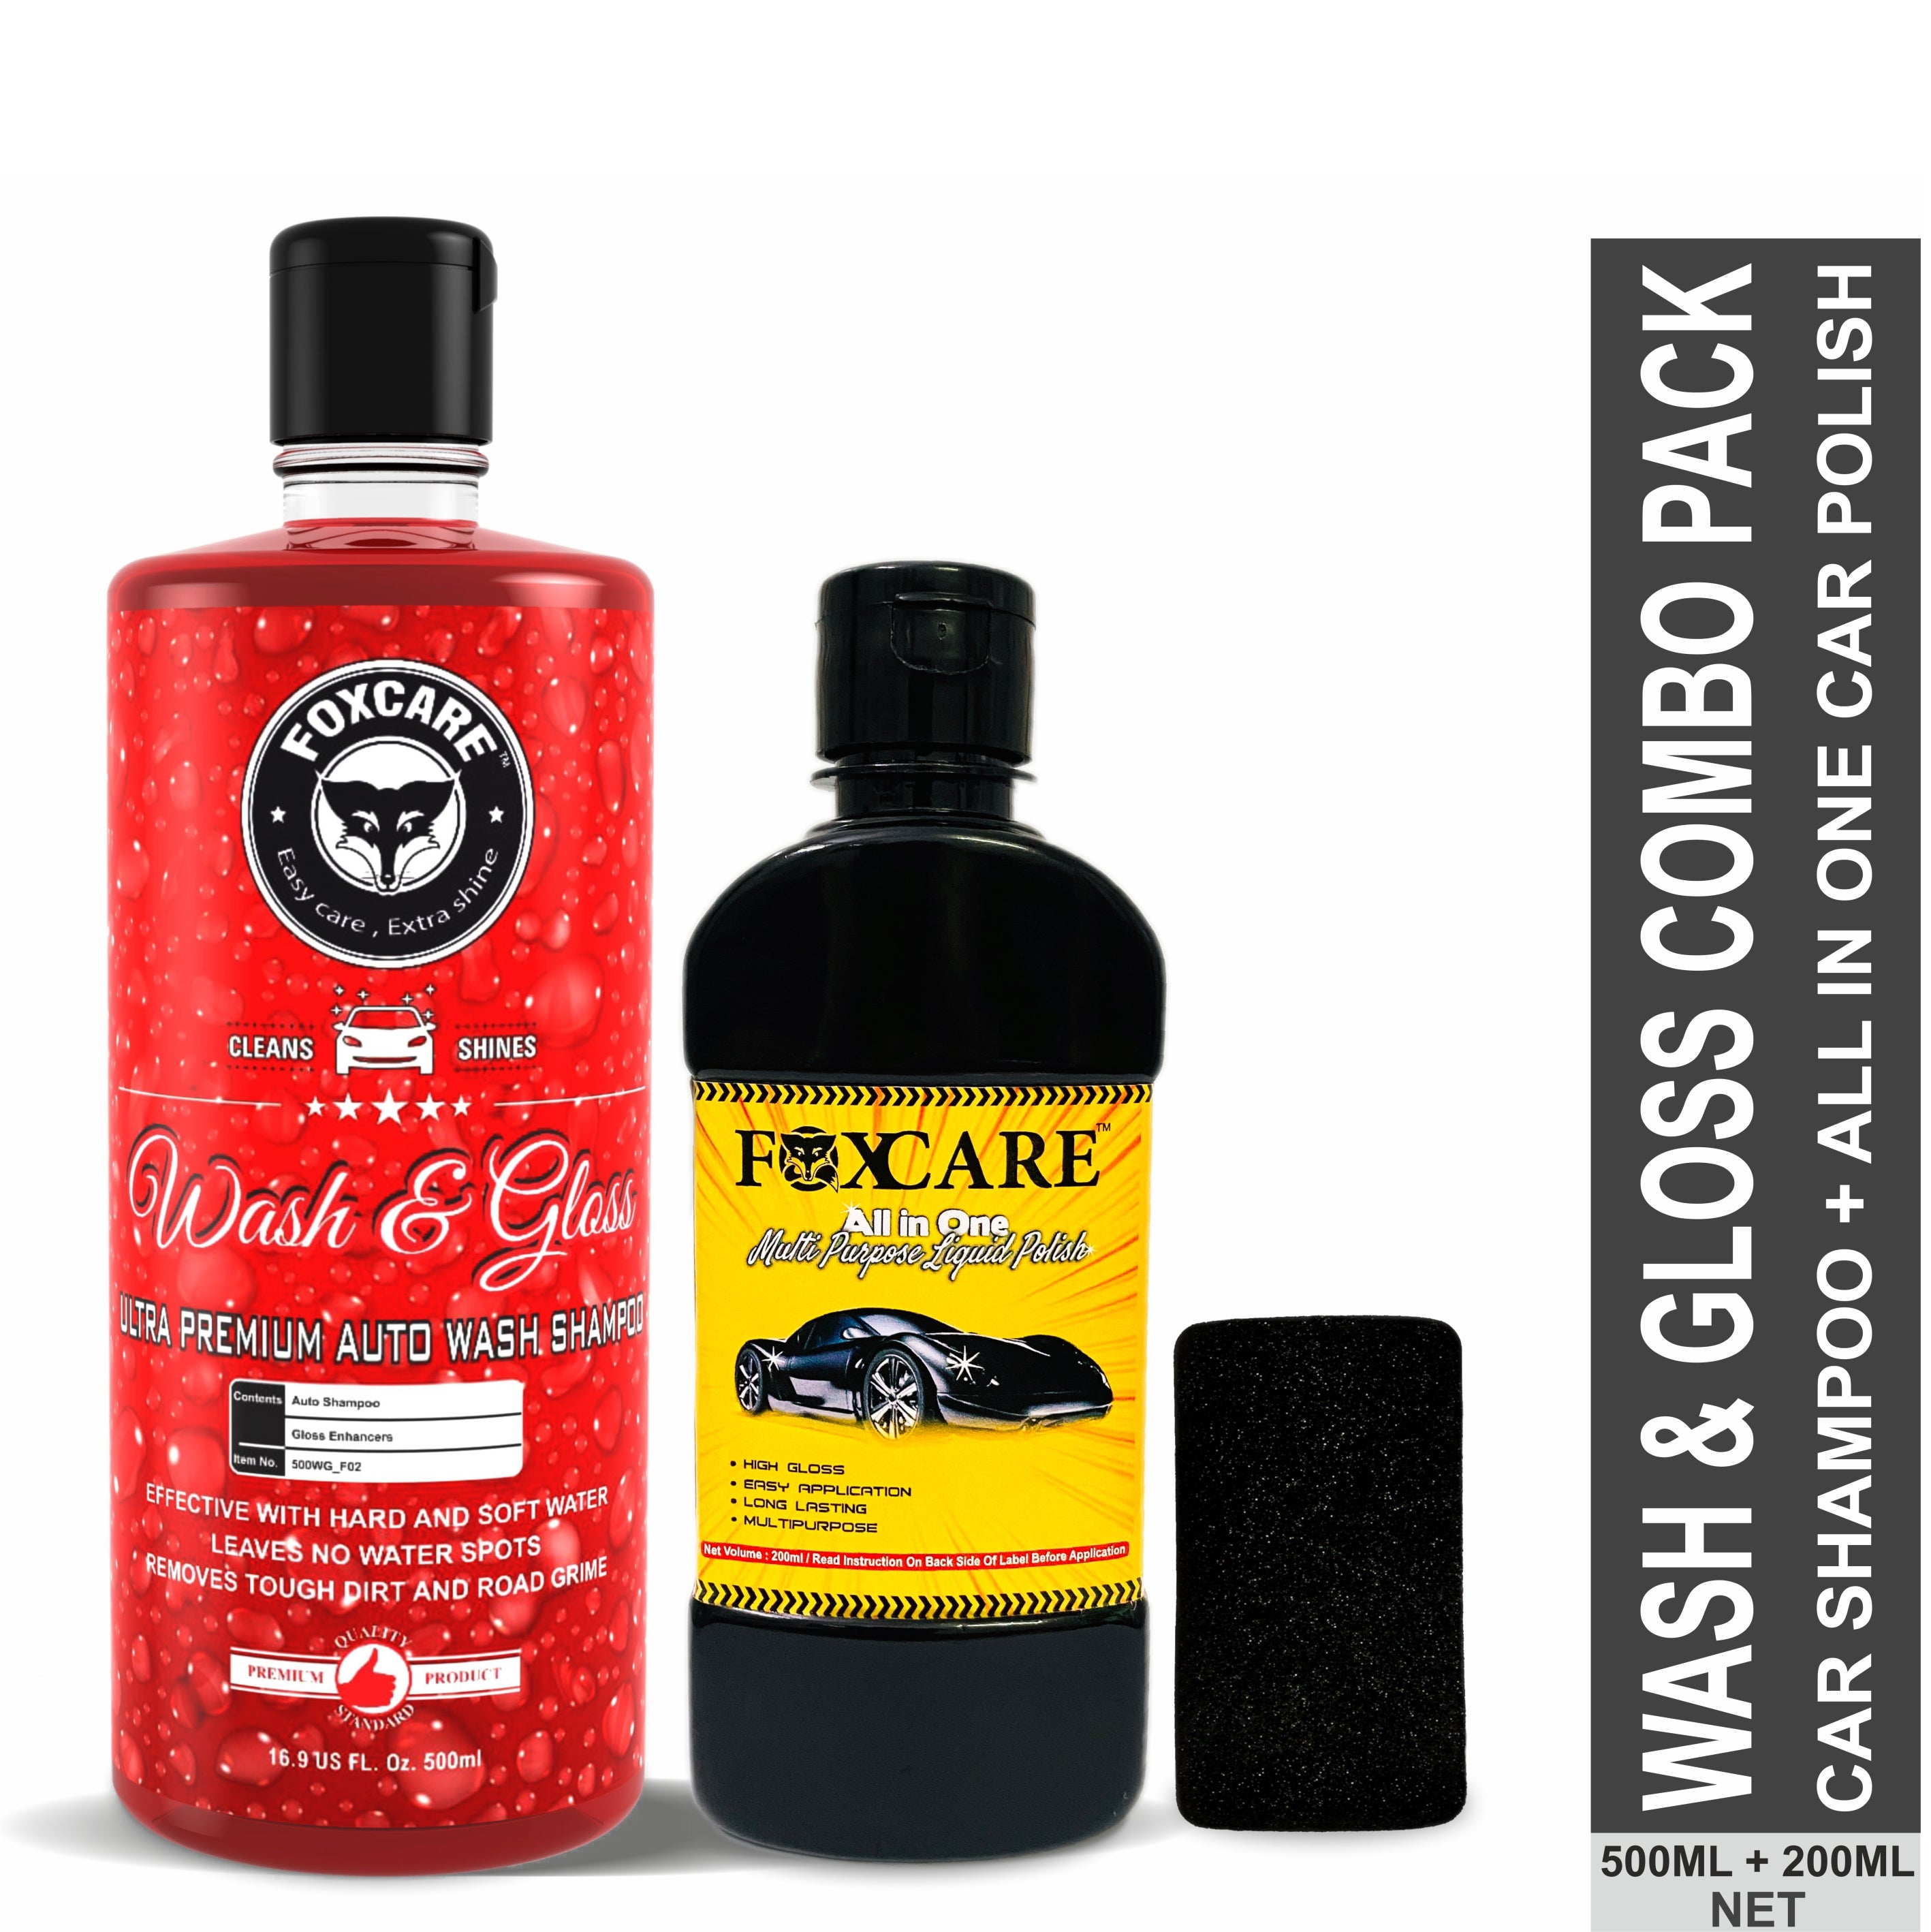 Foxcare shampoo + car polish combo (700ml Net)